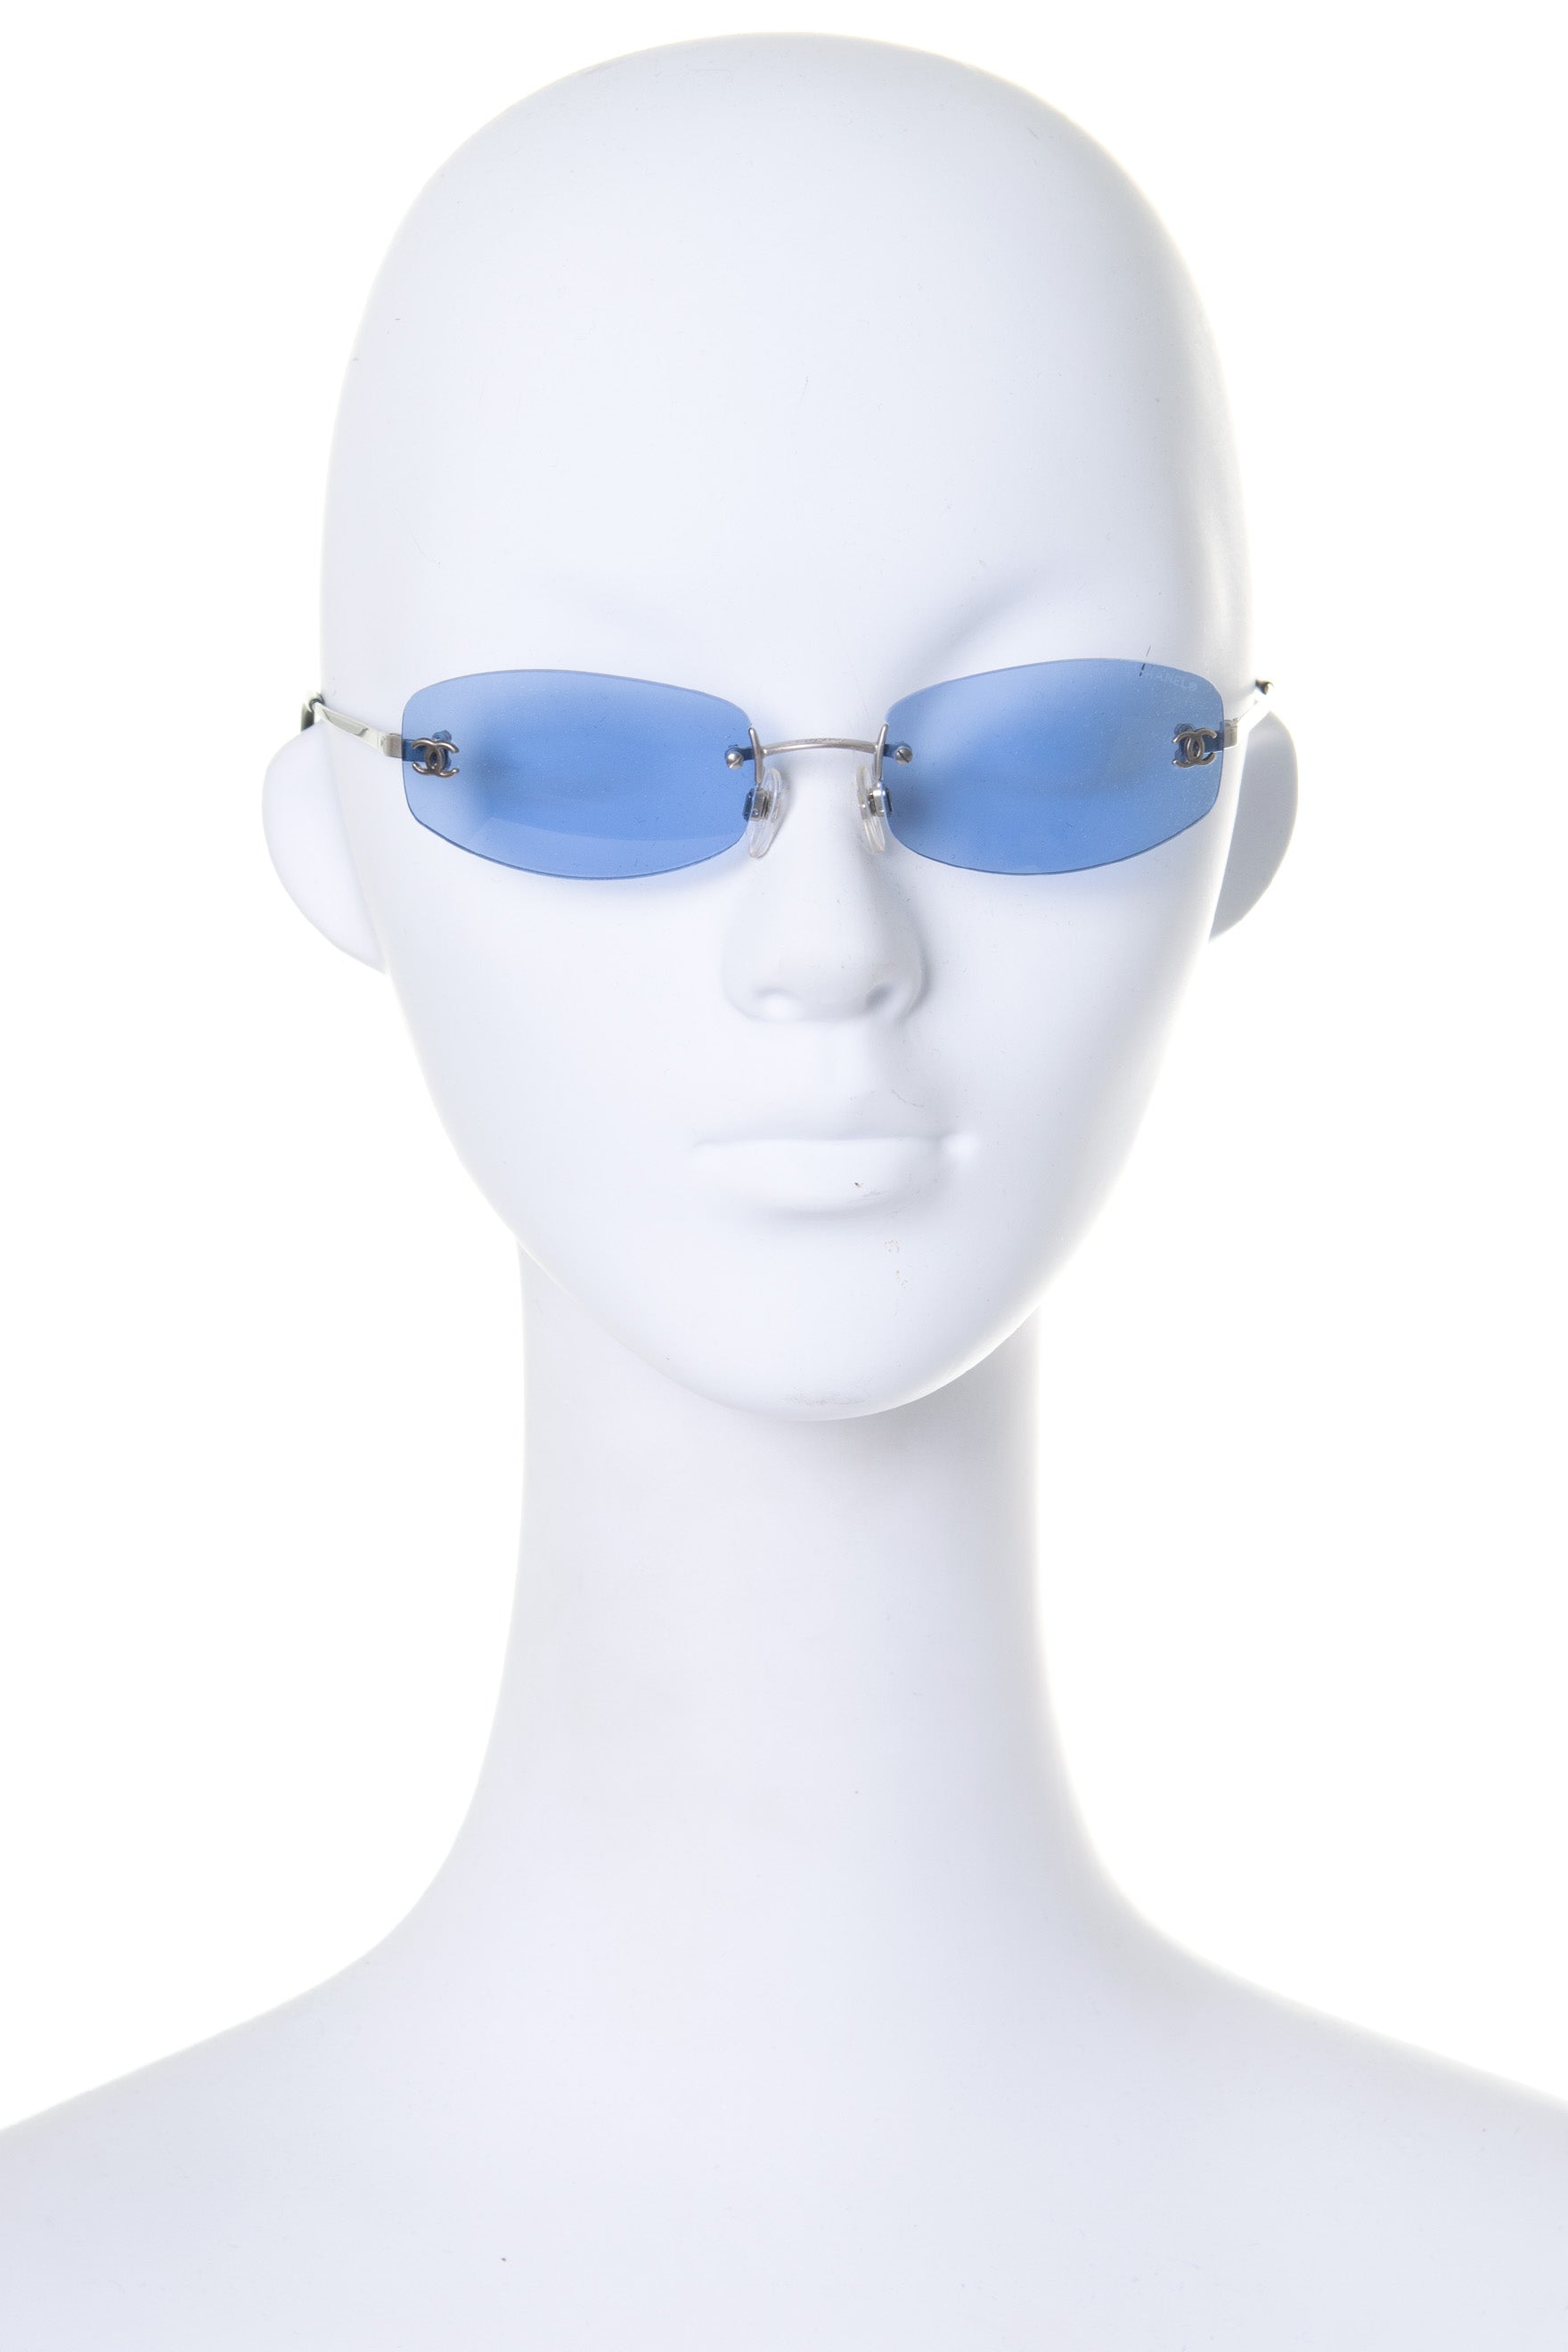 Chanel Sunglasses – Jean Vintage